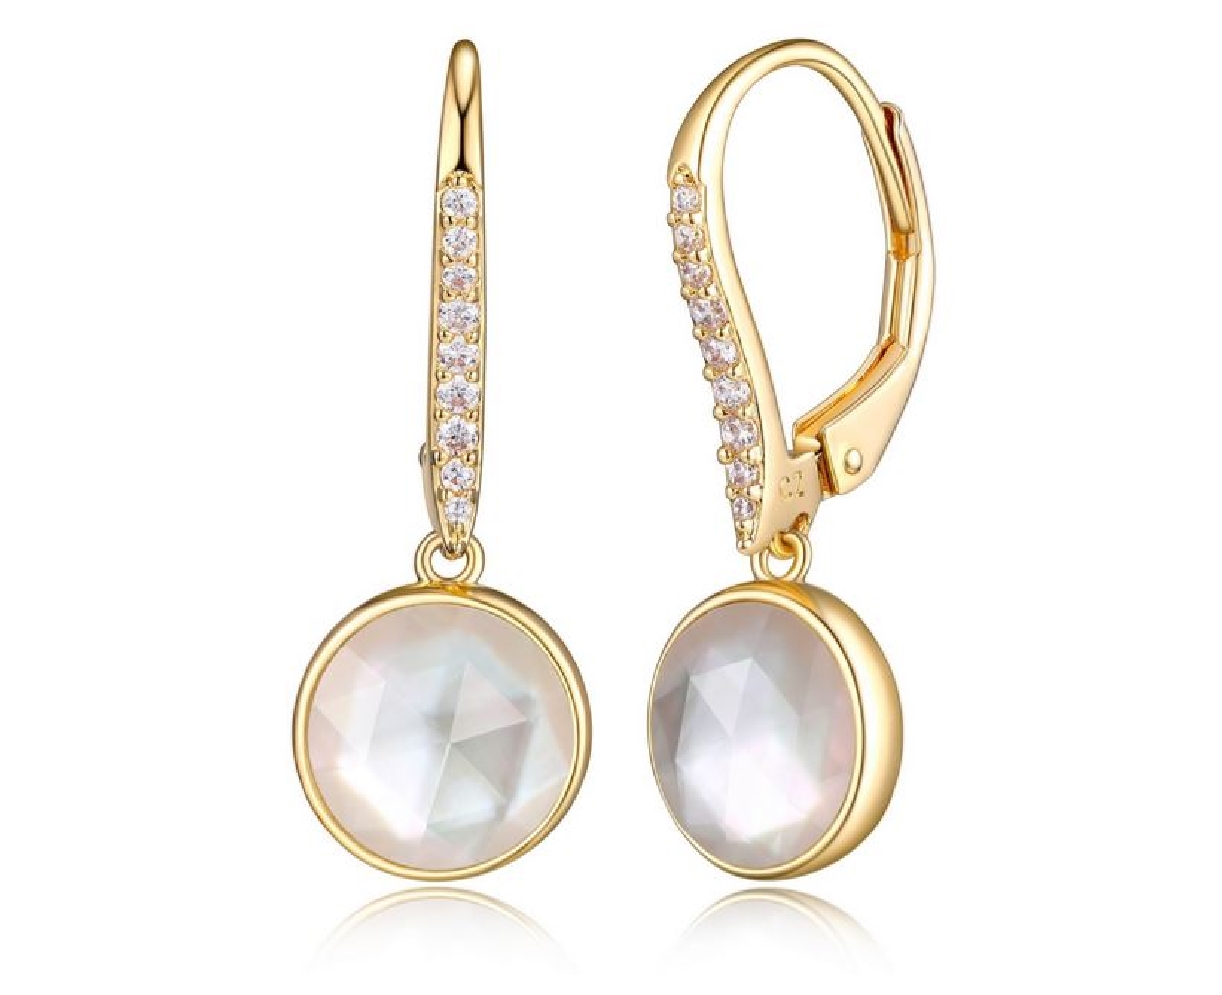 Reign Diamondlite CZ
Earrings
White Crystal/M...